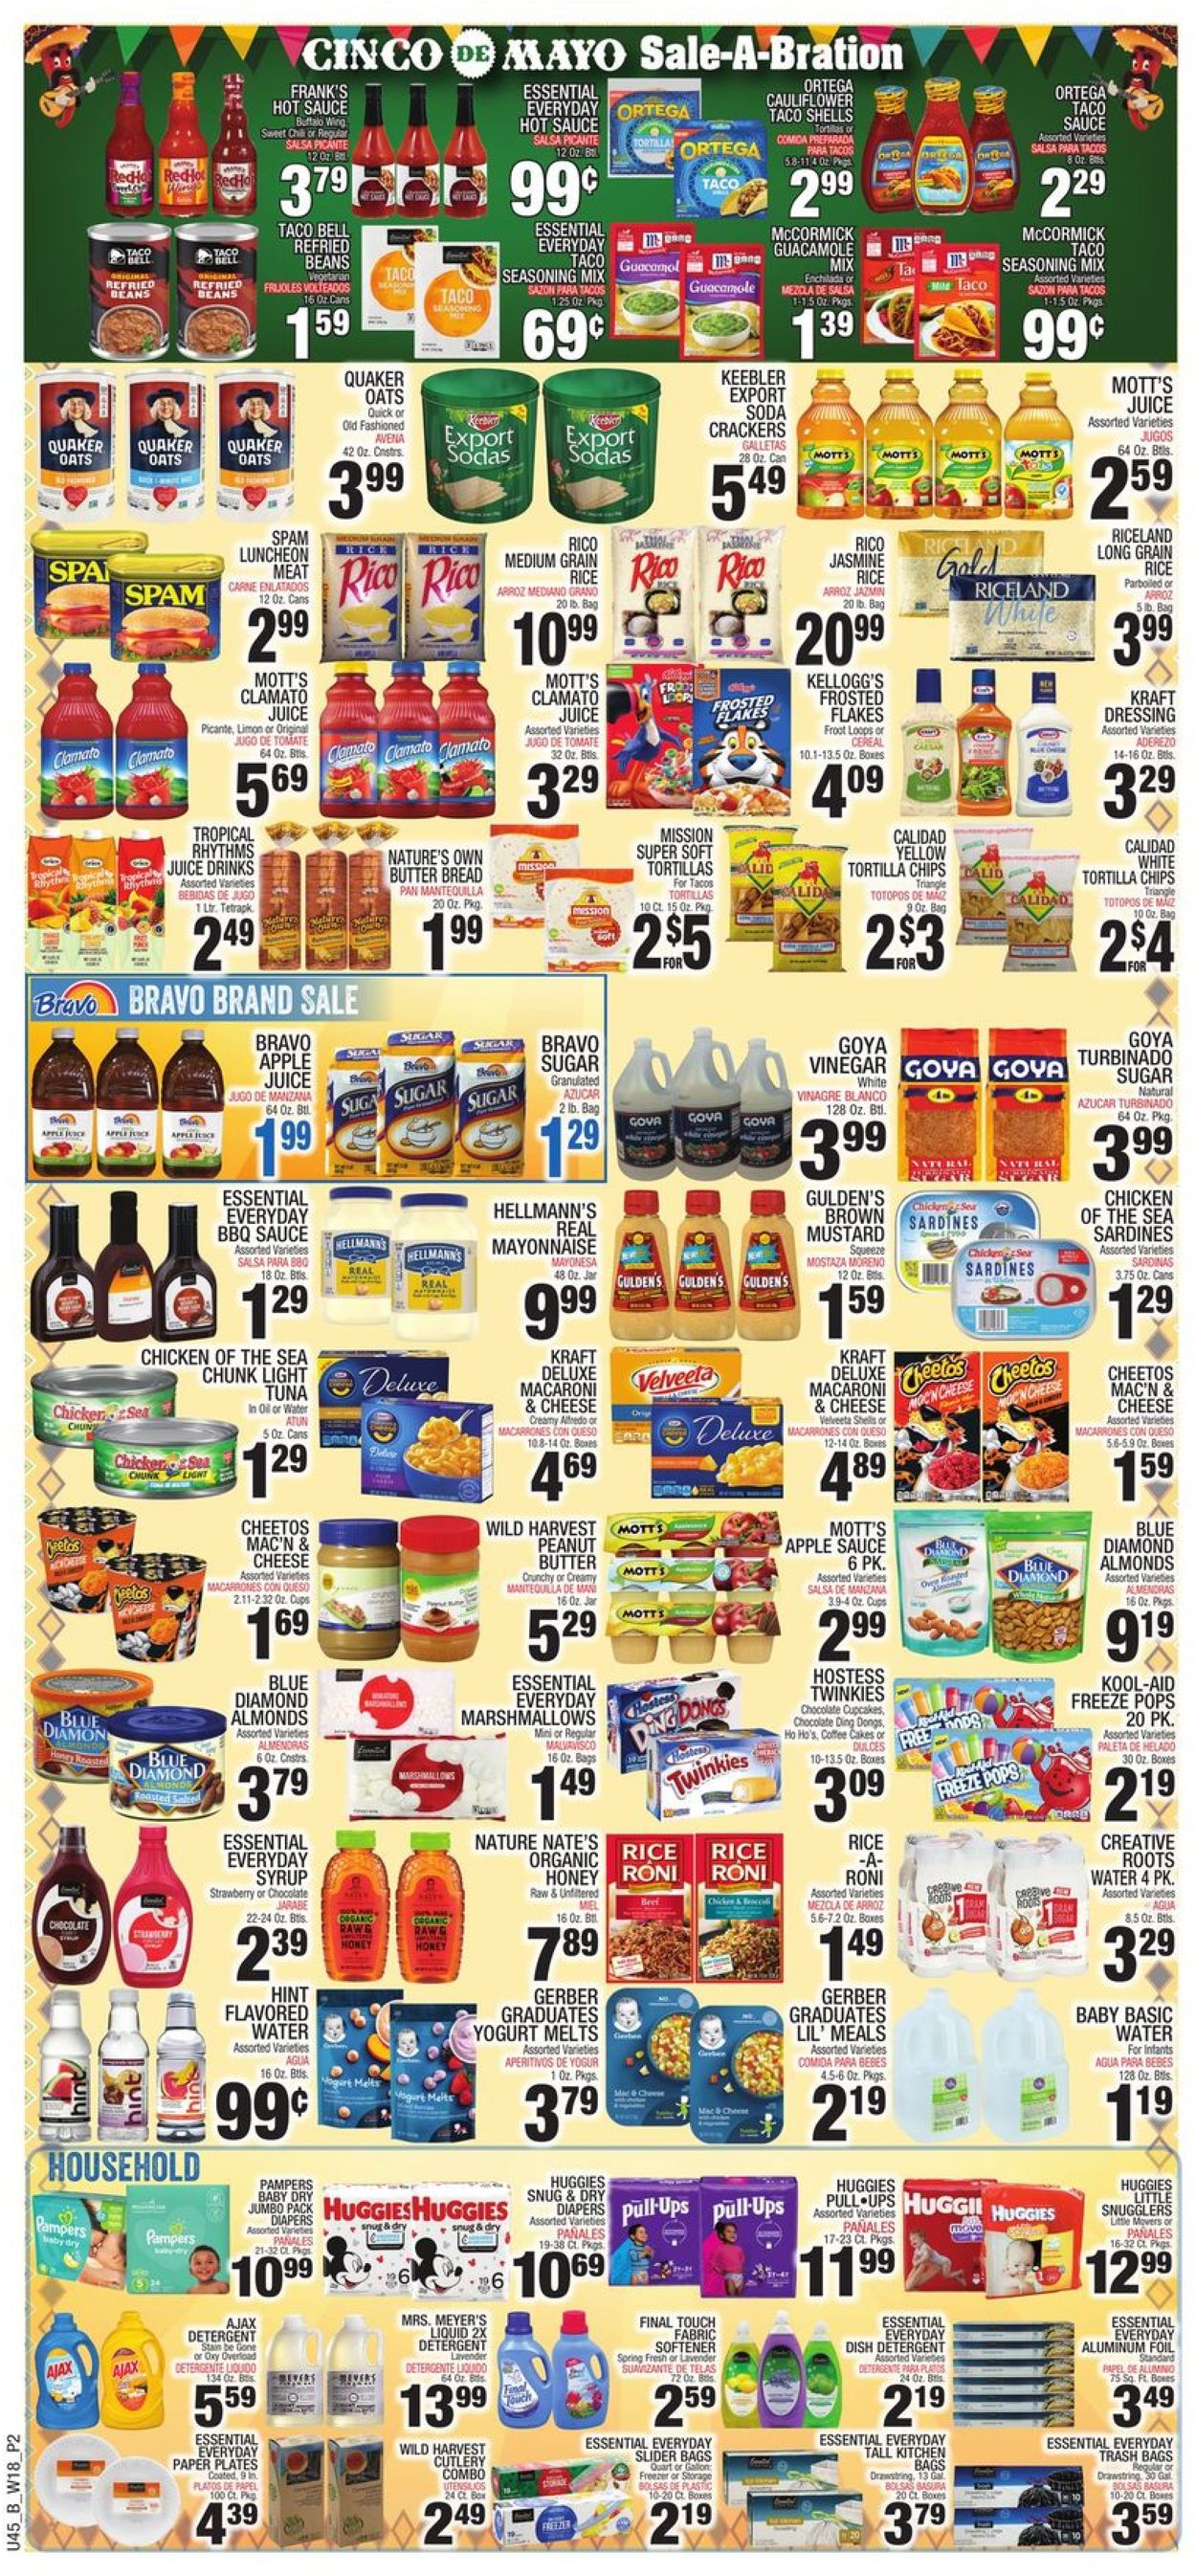 Catalogue Bravo Supermarkets from 04/28/2022